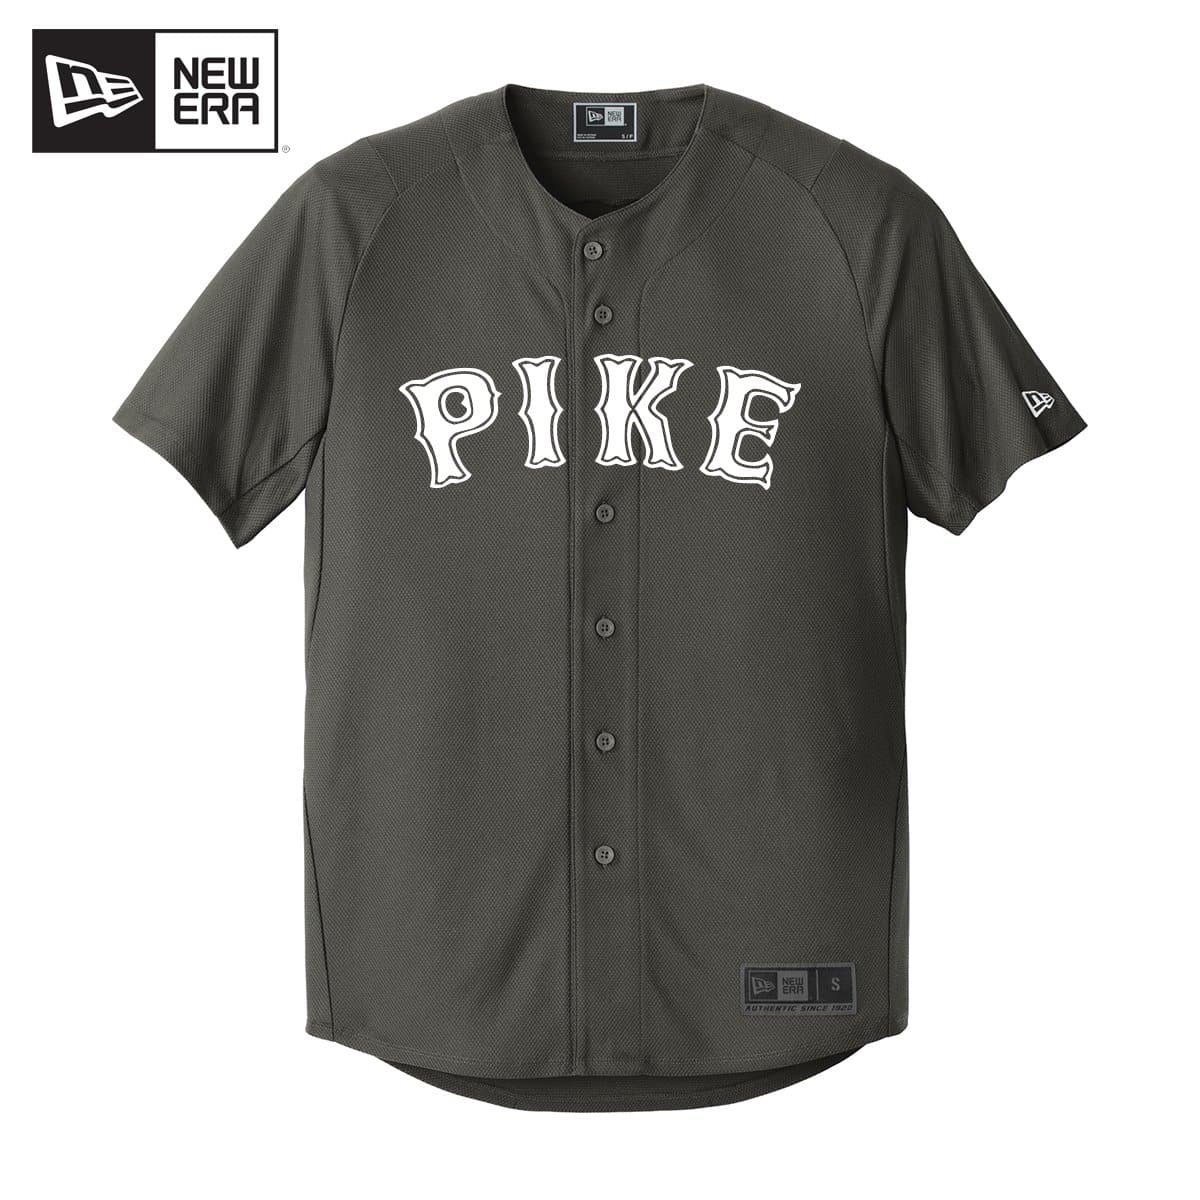 Pike New Era Graphite Baseball Jersey S